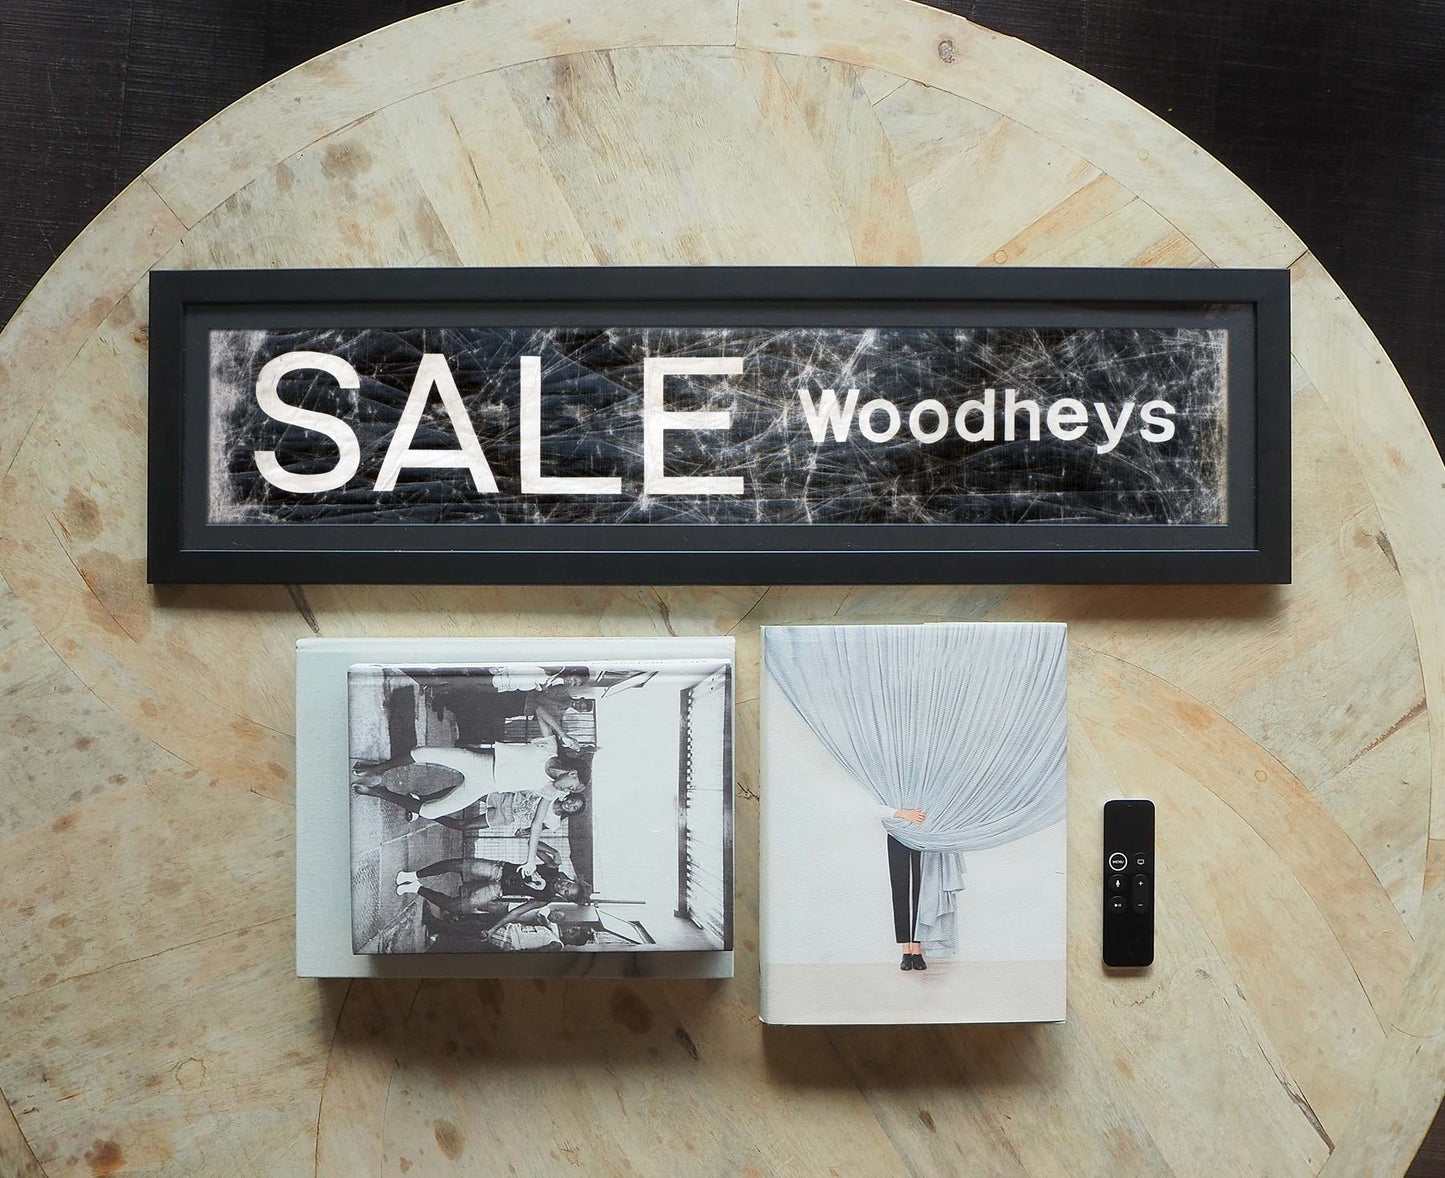 Sale Woodheys Framed Bus Blind